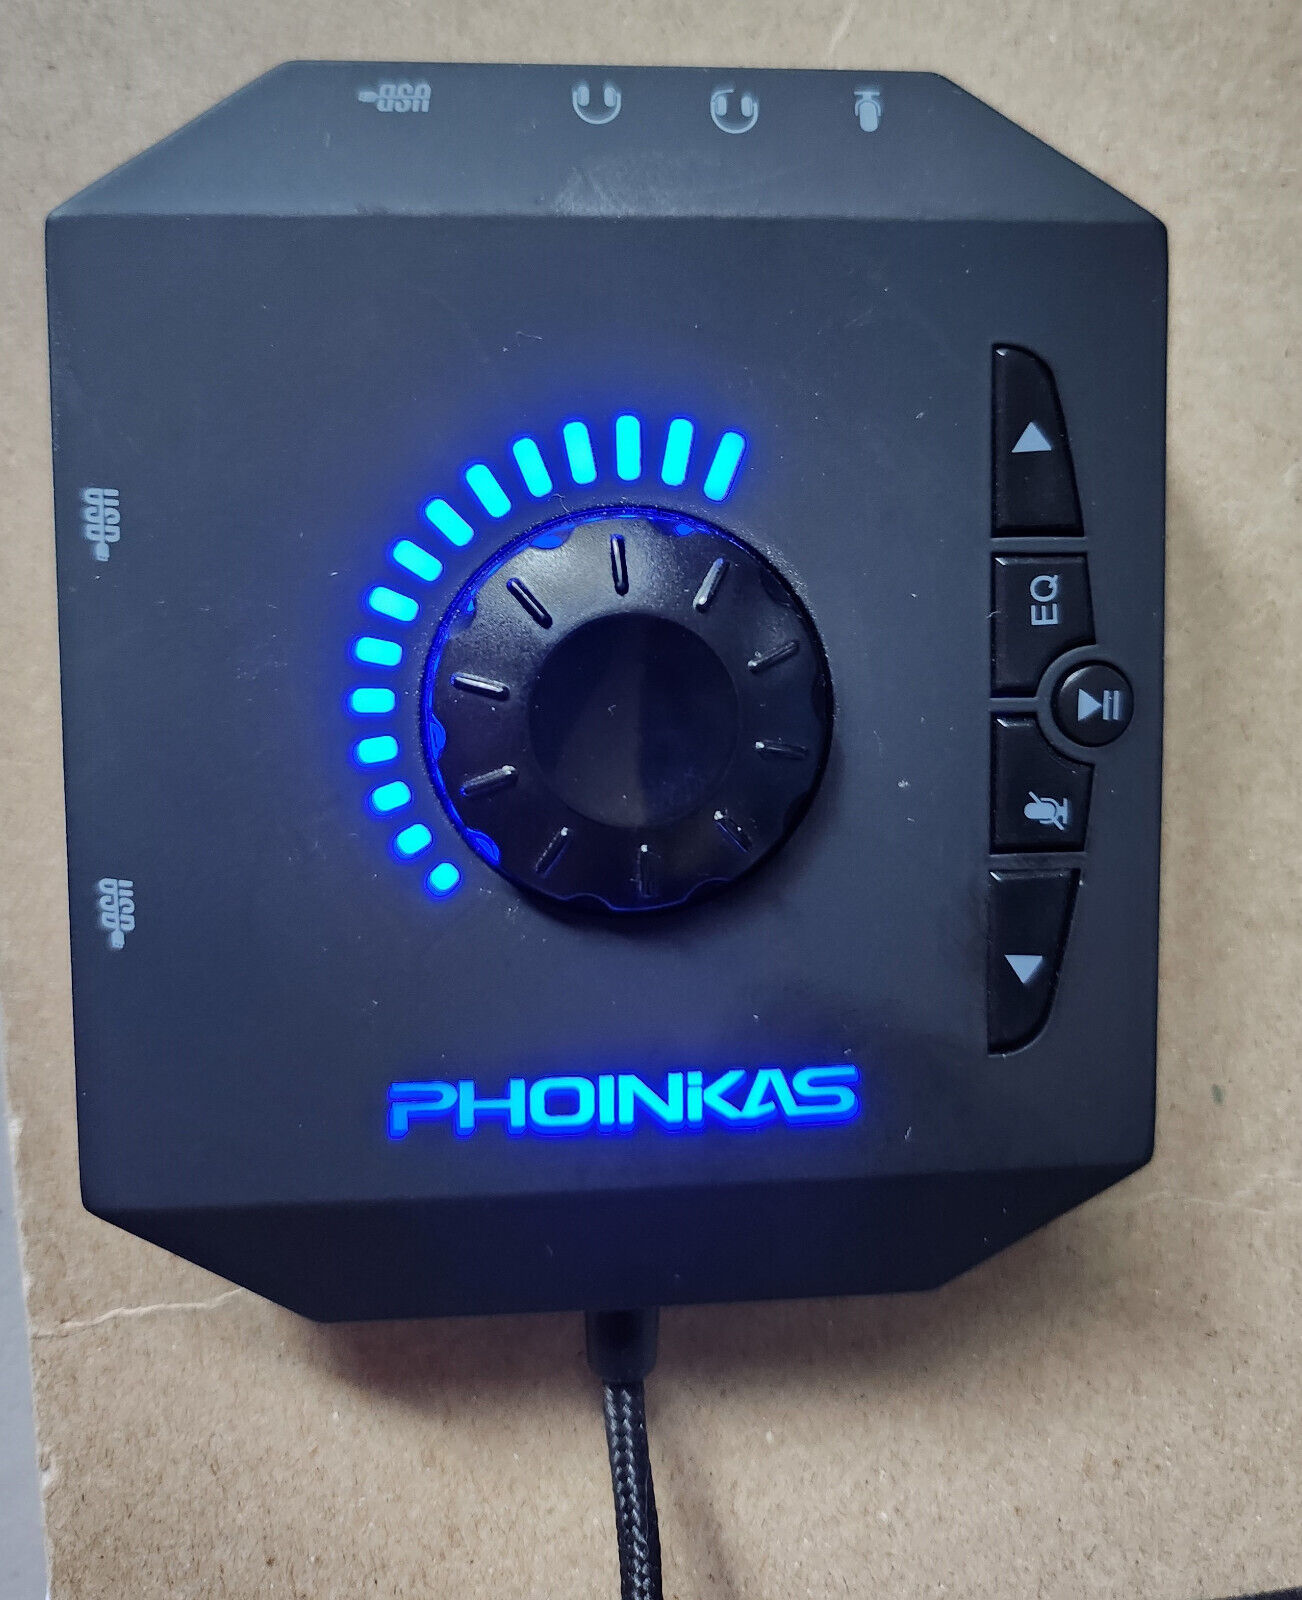 PHOINIKAS USB External Sound Card HUB T-10, Black Audio Adapterwith Six Ports